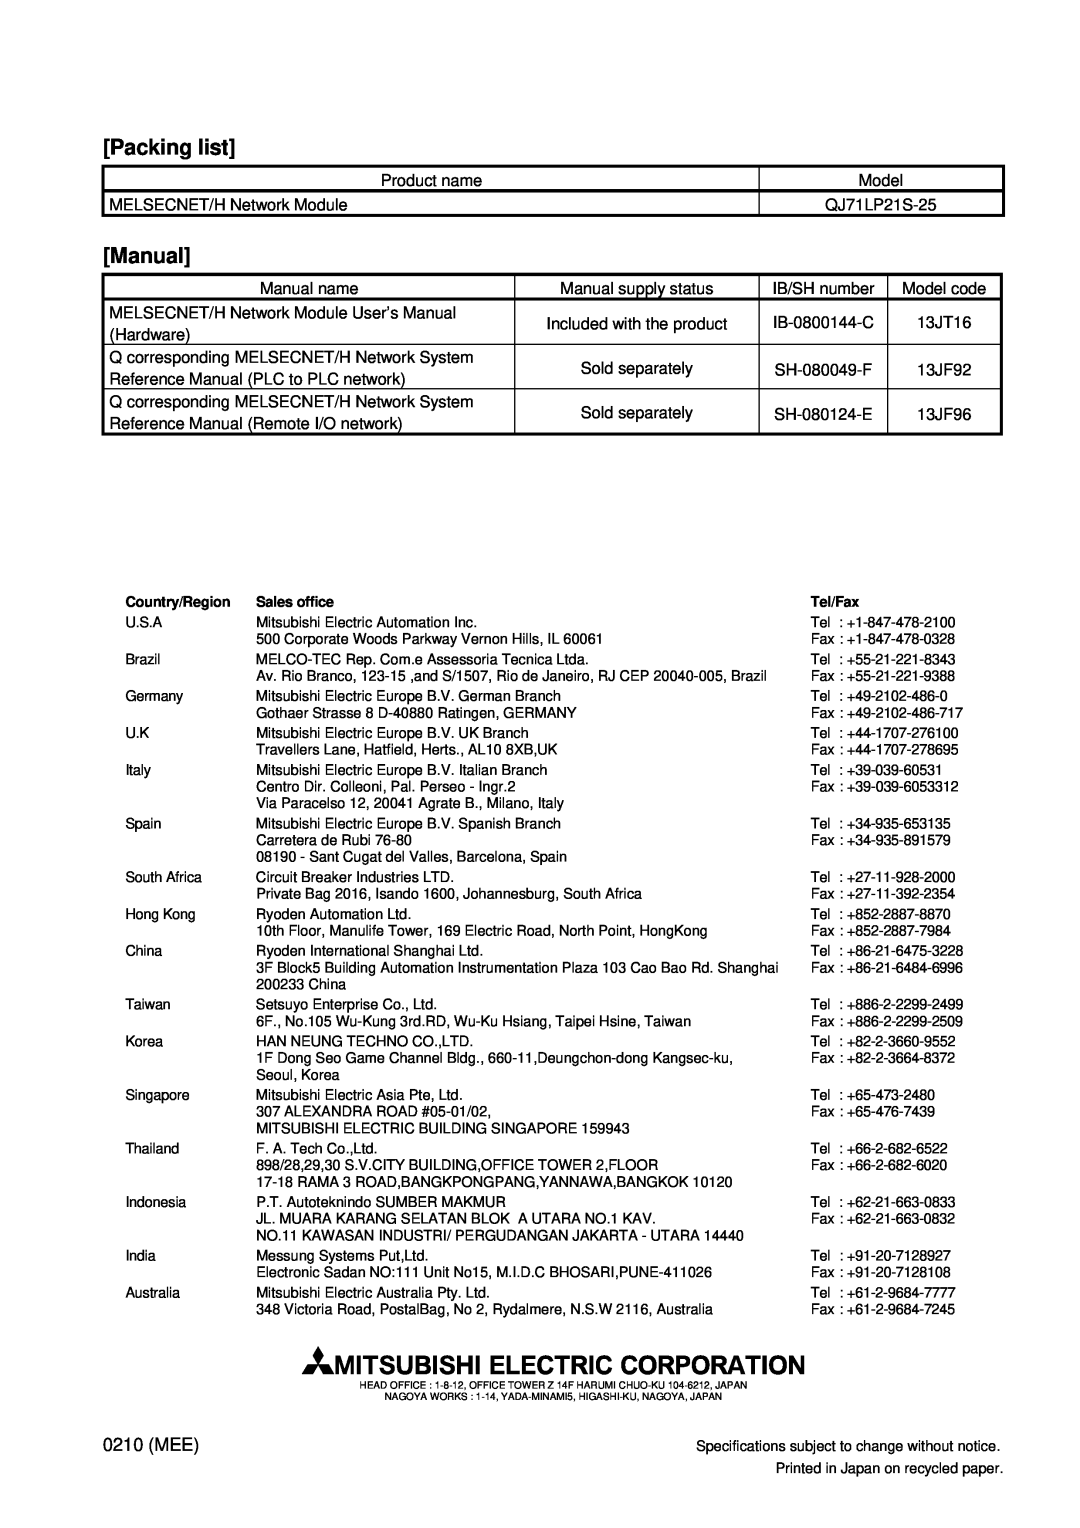 Mitsubishi Electronics MELSECNET/H manual Packing list, Manual, 0210 MEE 